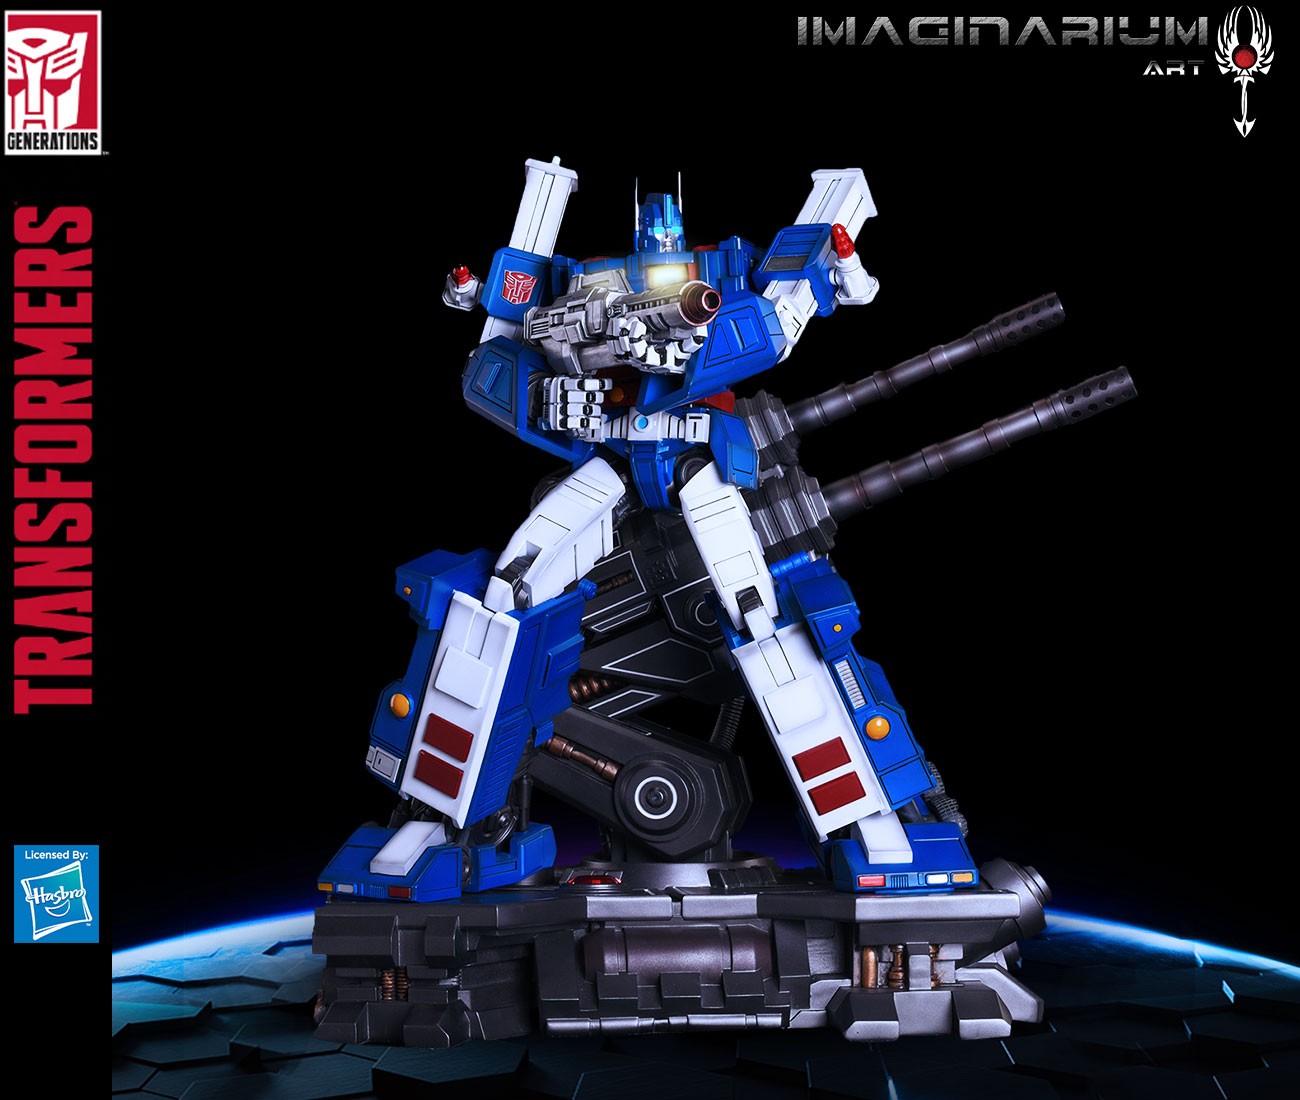 Transformers News: New Images of Imaginarium Art Transformers Ultra Magnus Statue